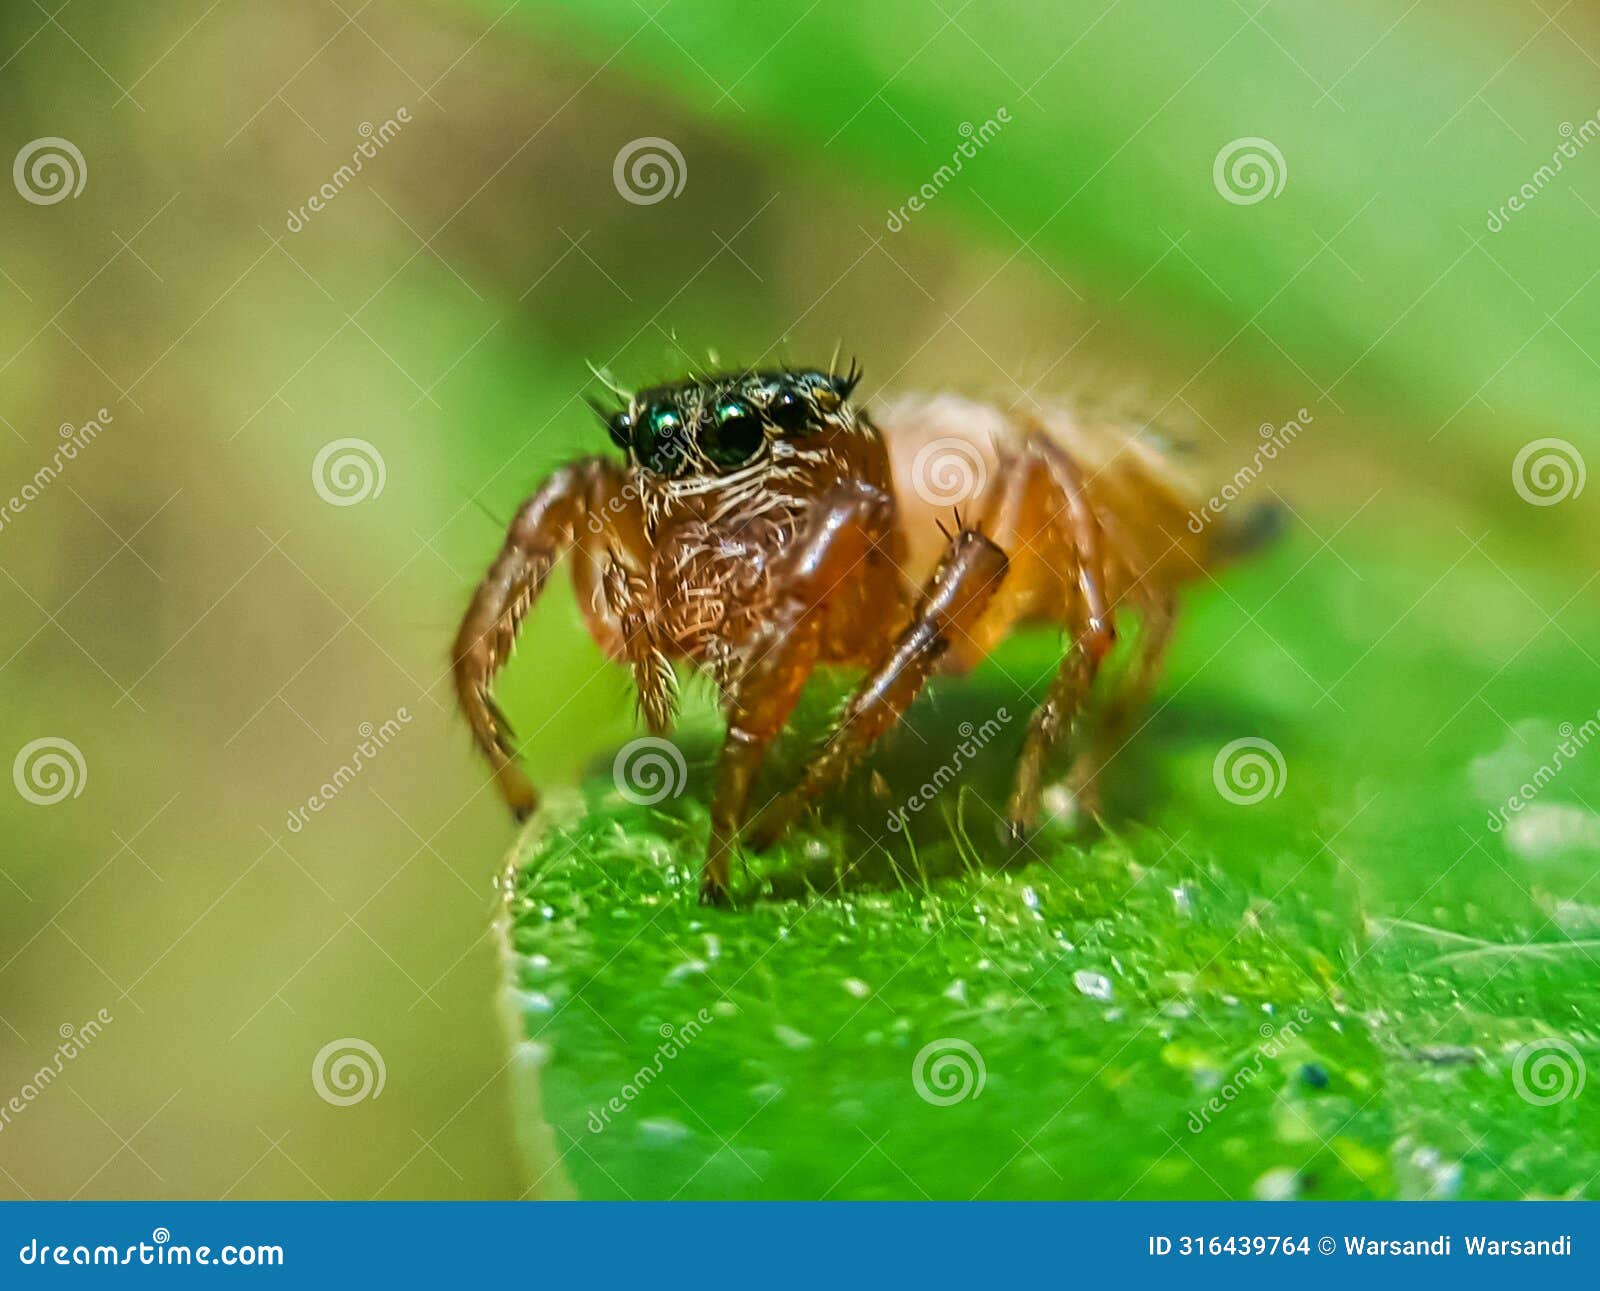 close-up photo of spider. animalia